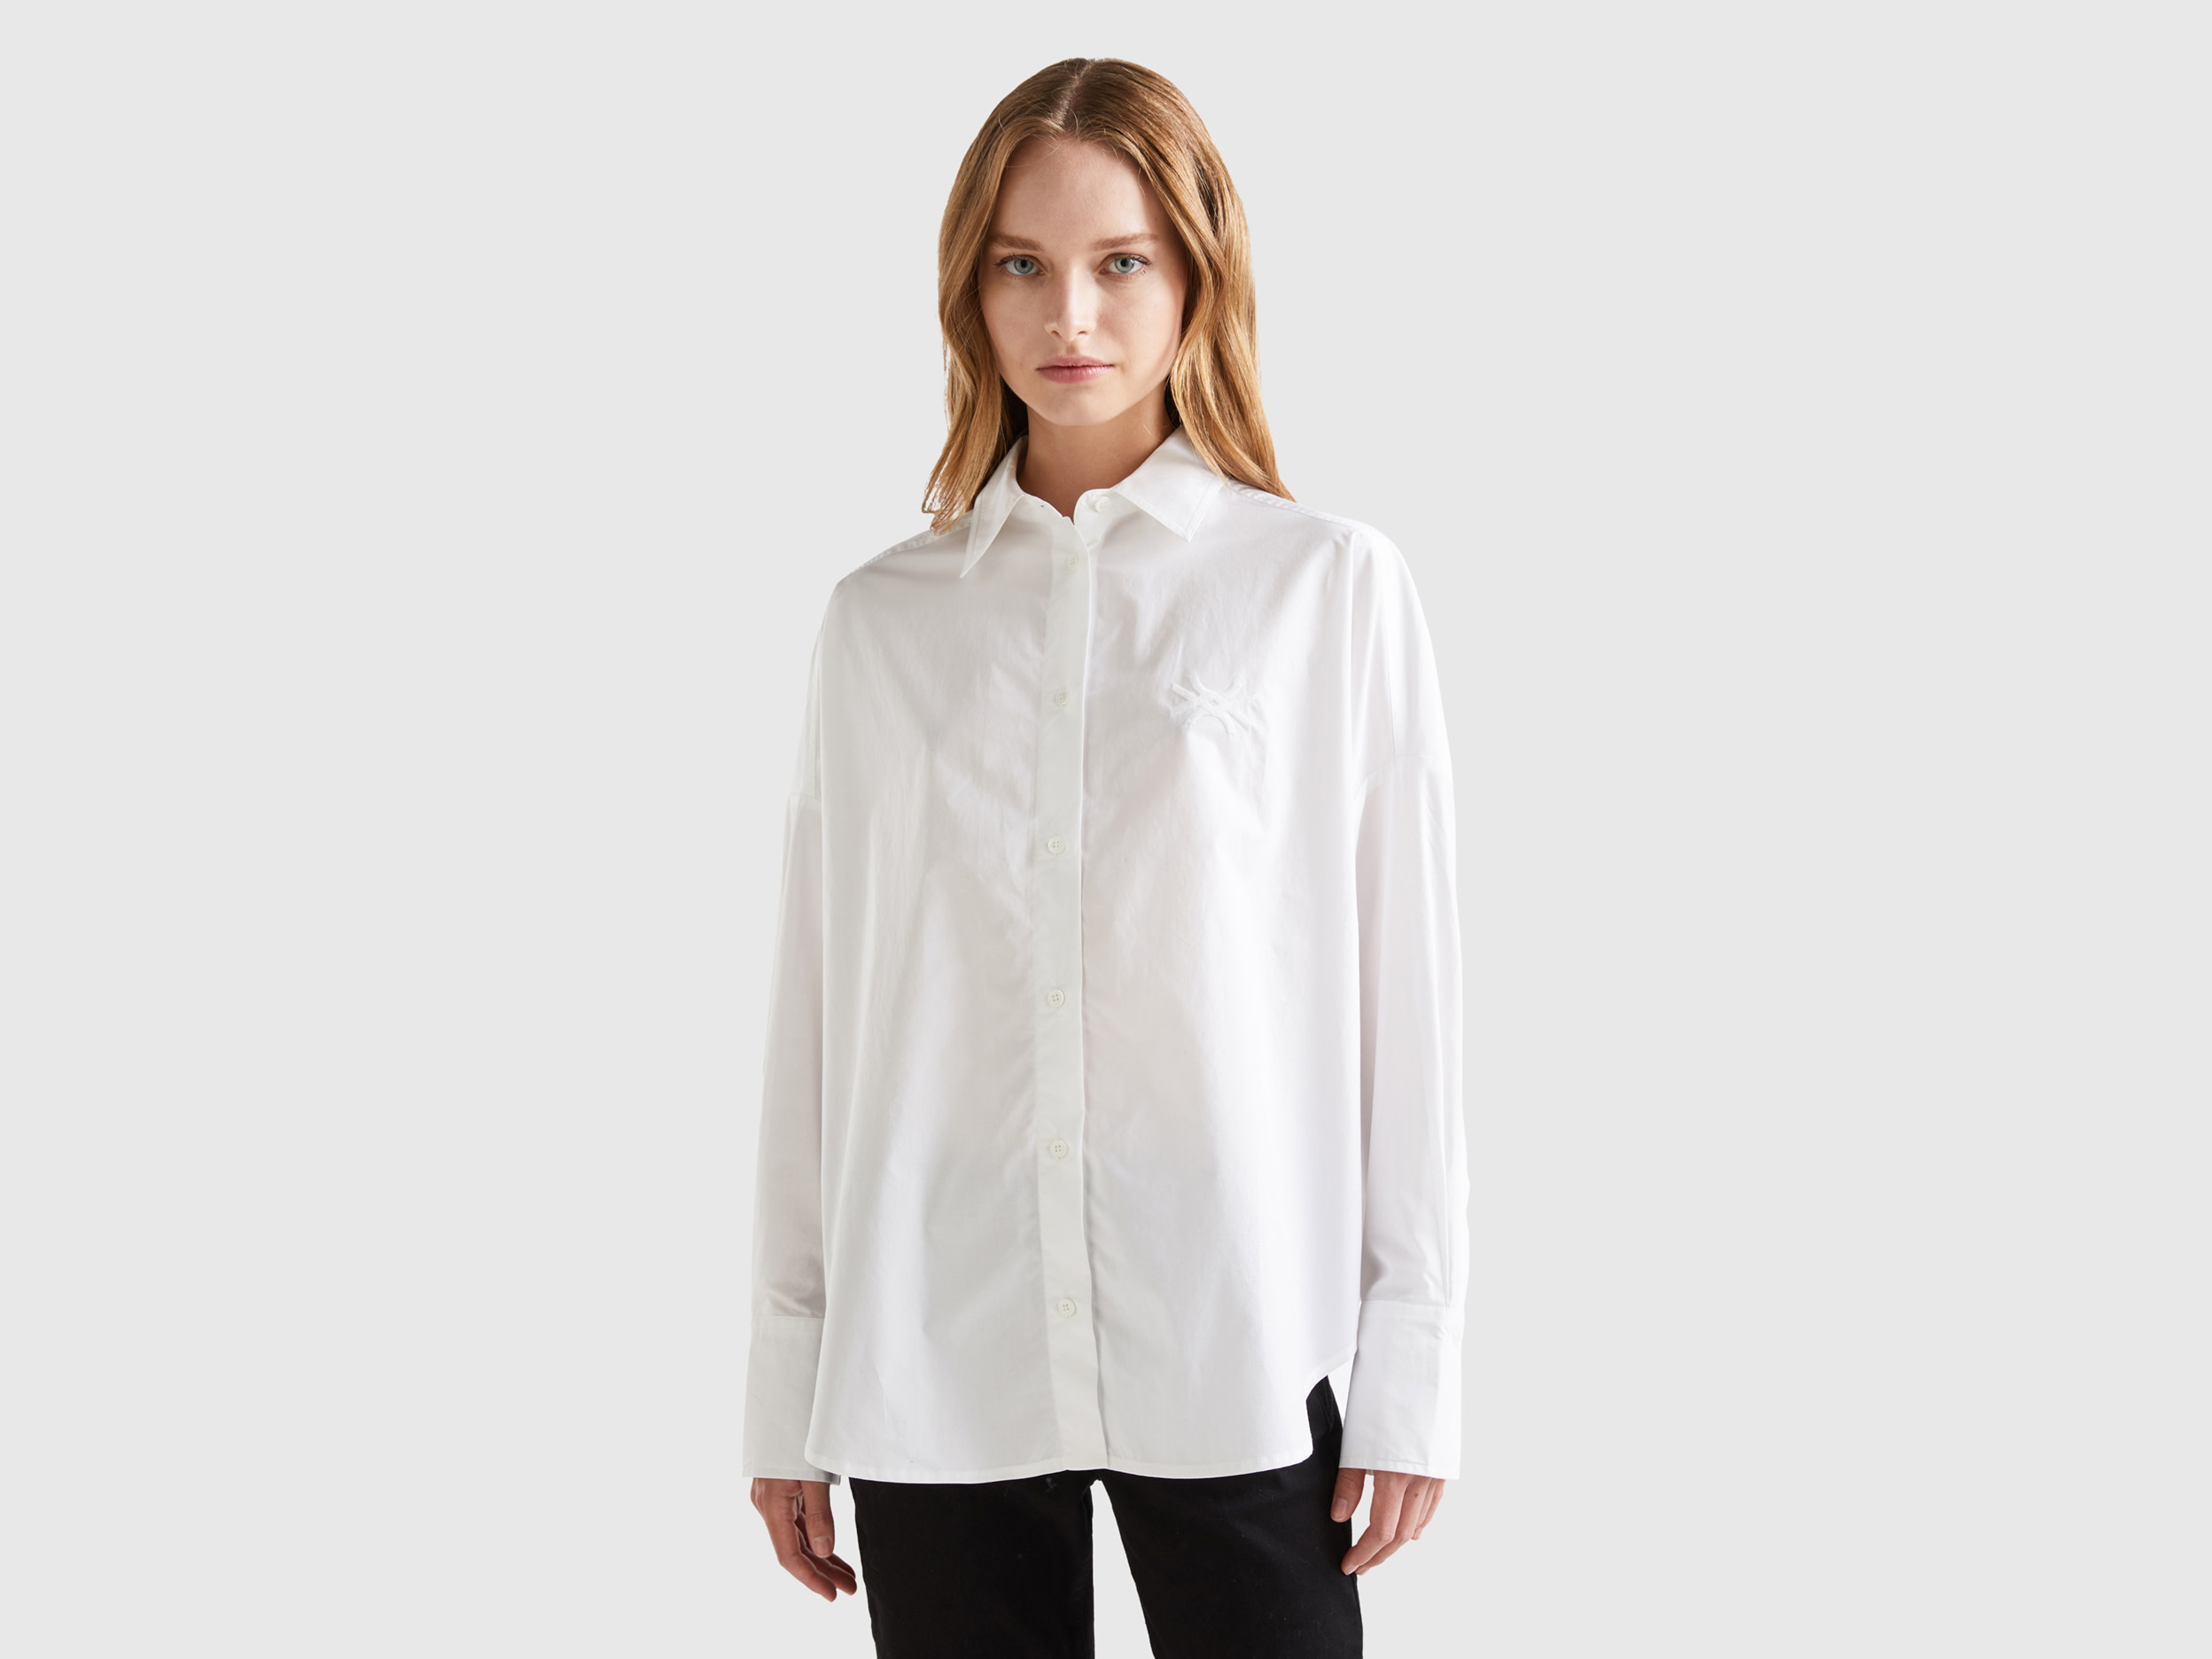 Benetton, Oversized 100% Cotton Shirt, size S, White, Women